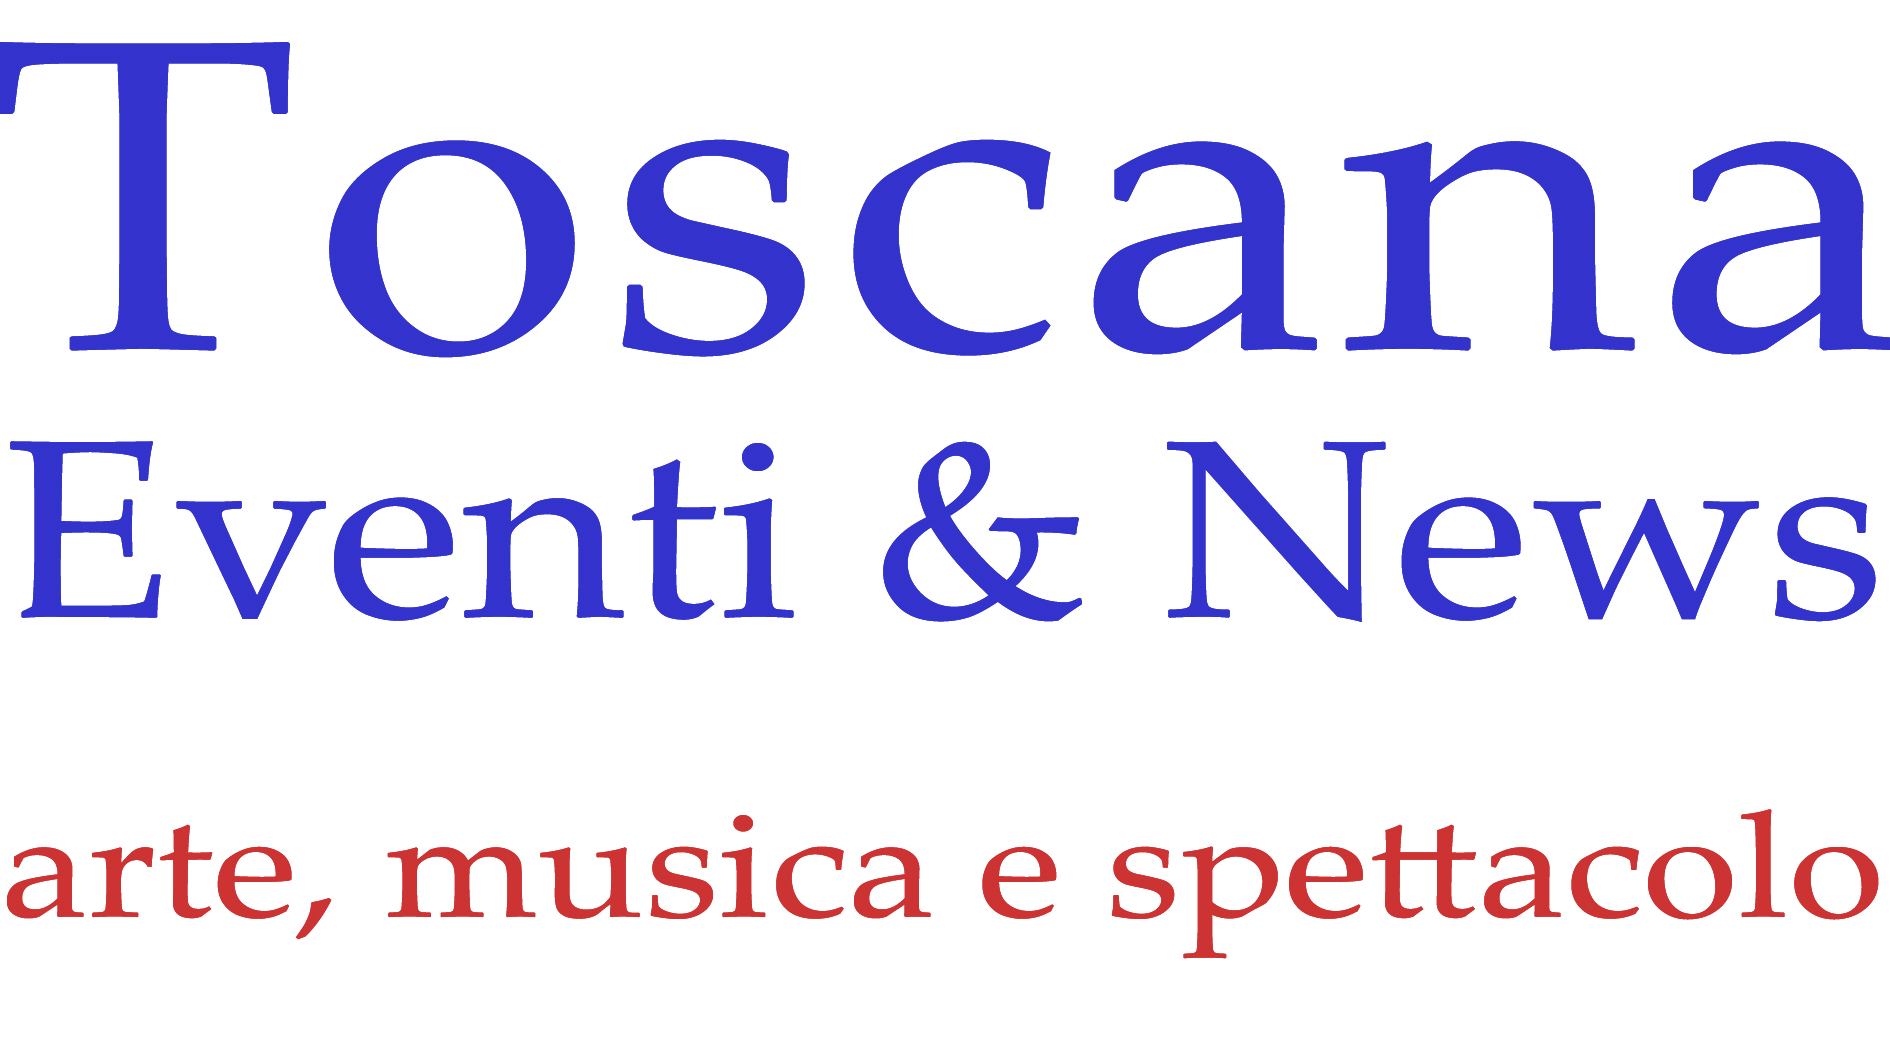 Toscana Eventi & News